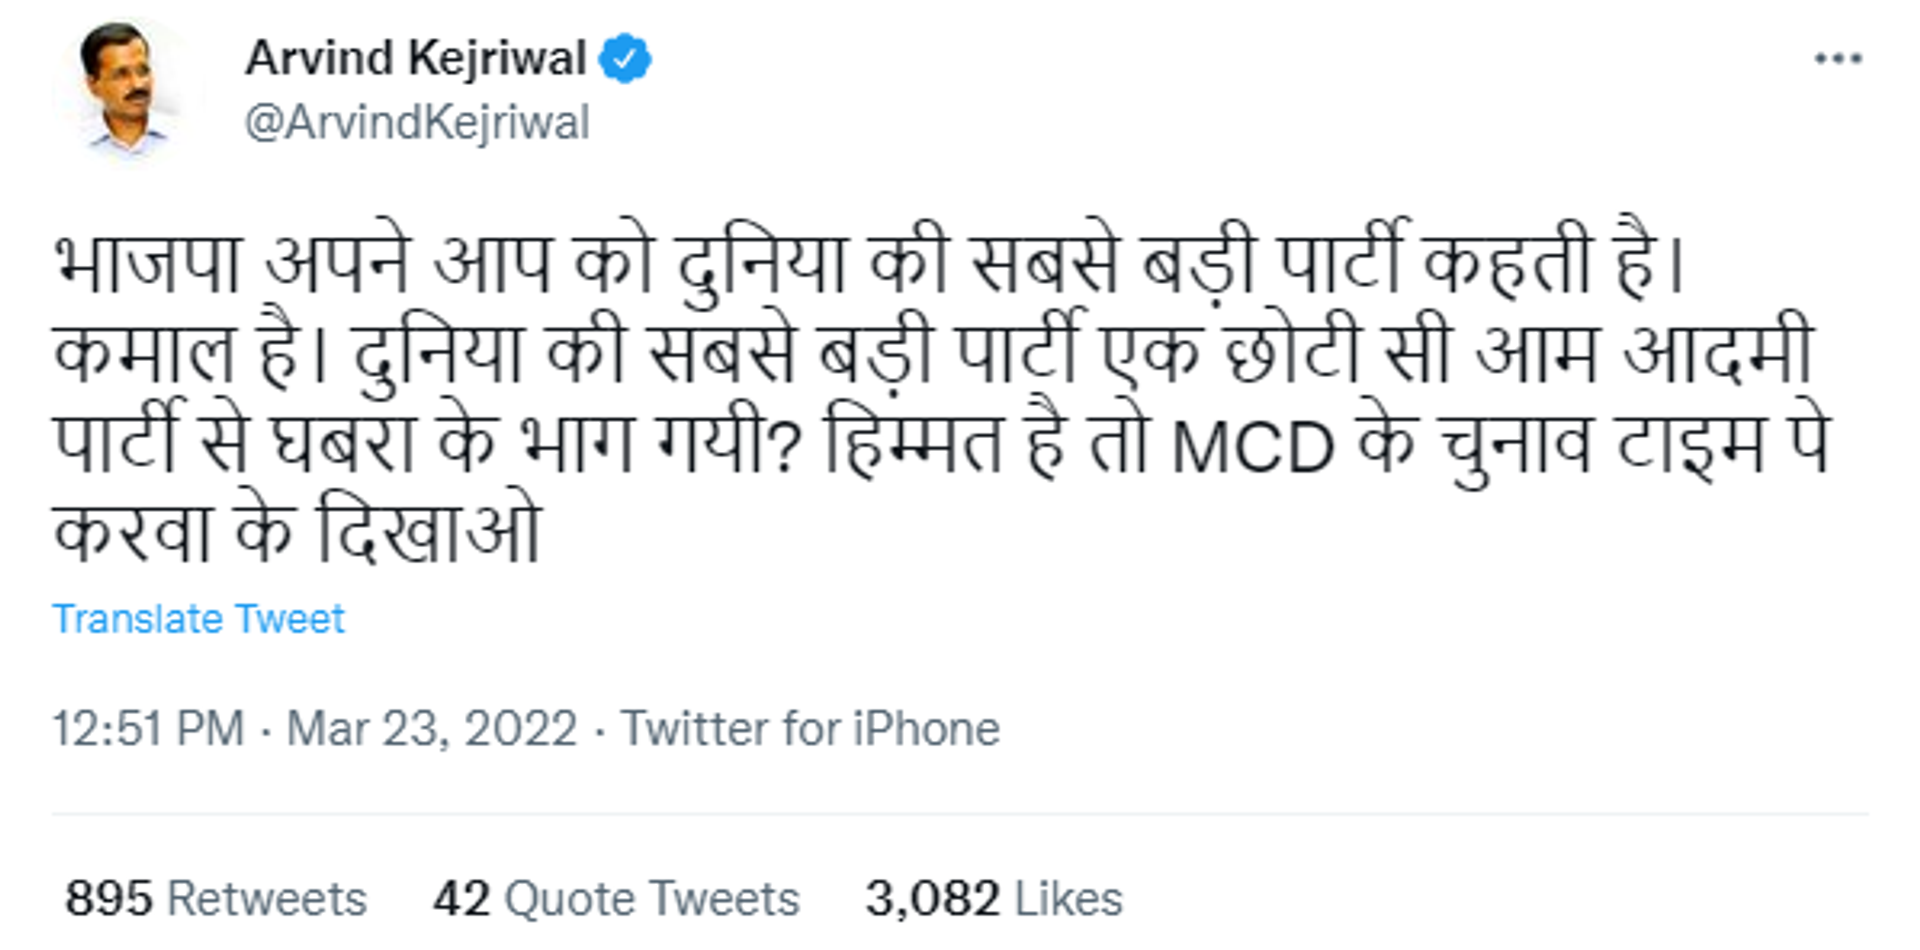 Delhi State Chief Arvind Kejriwal Dares BJP to Conduct MCD Polls on Time - Sputnik International, 1920, 23.03.2022